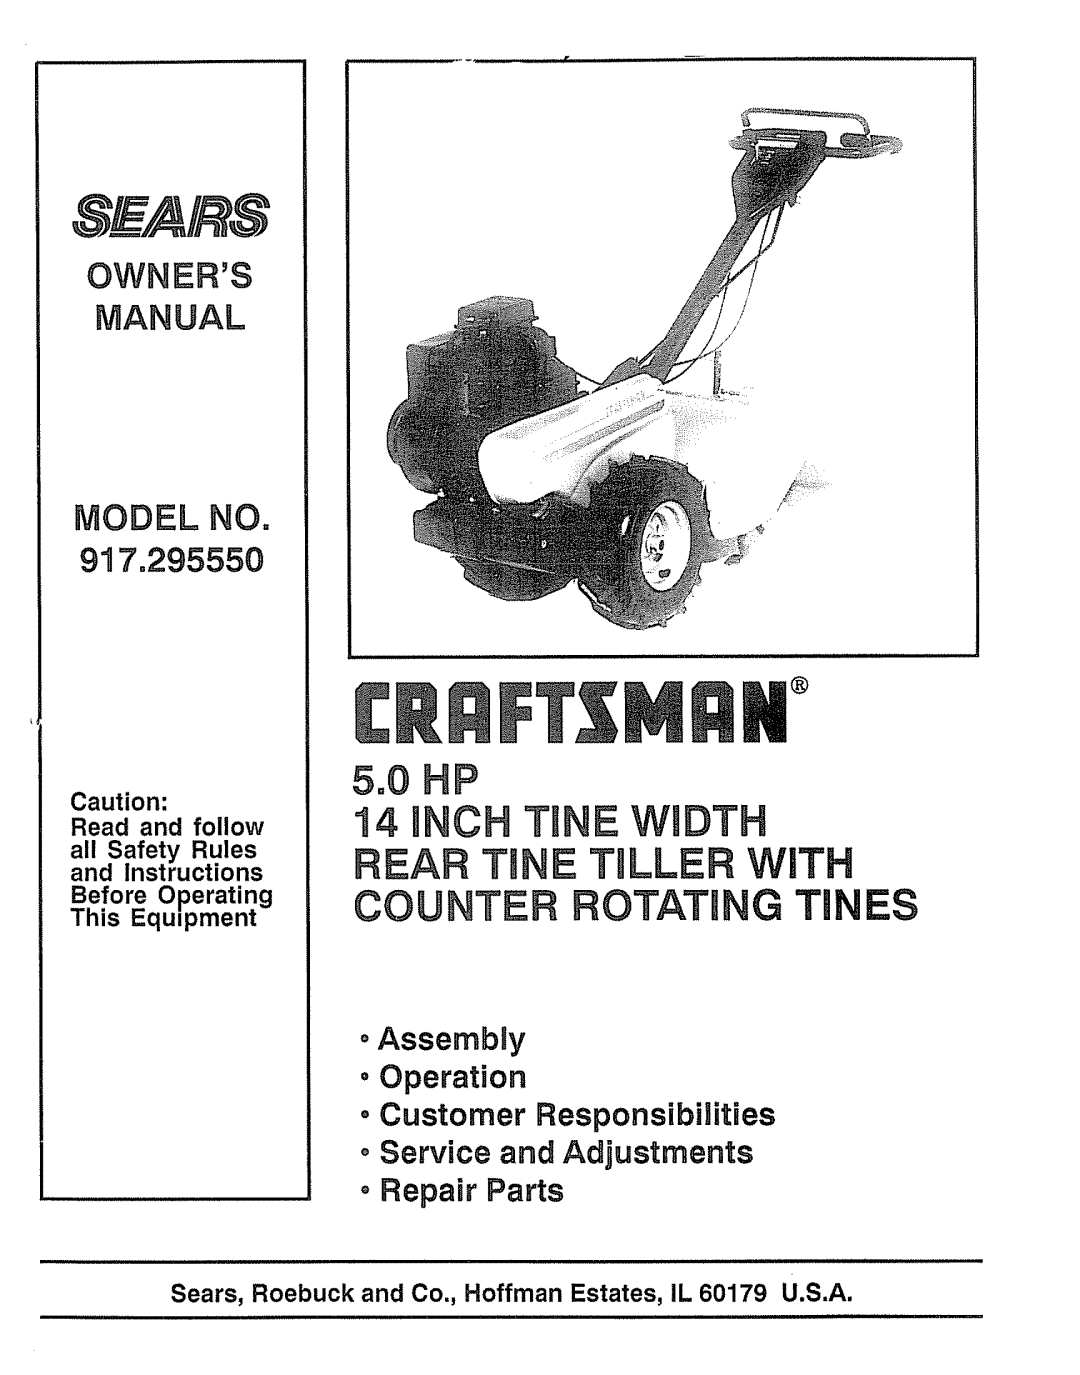 Craftsman 917.29555 manual Counter Rotating Ti Es, oAssembUy Operation, Customer Responsibilities, oRepair Parts 